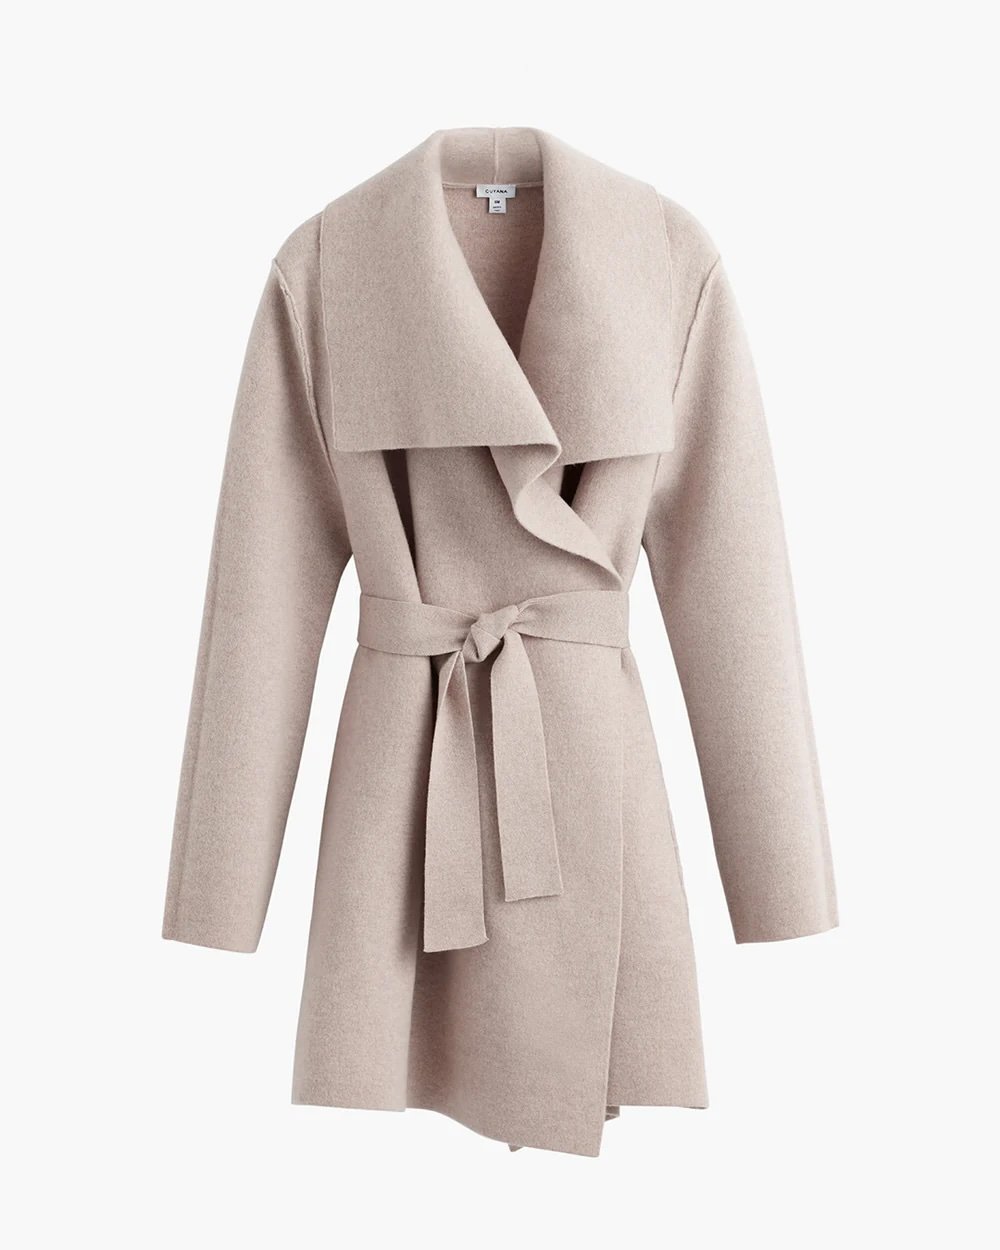 Wool Cashmere Coat, $398